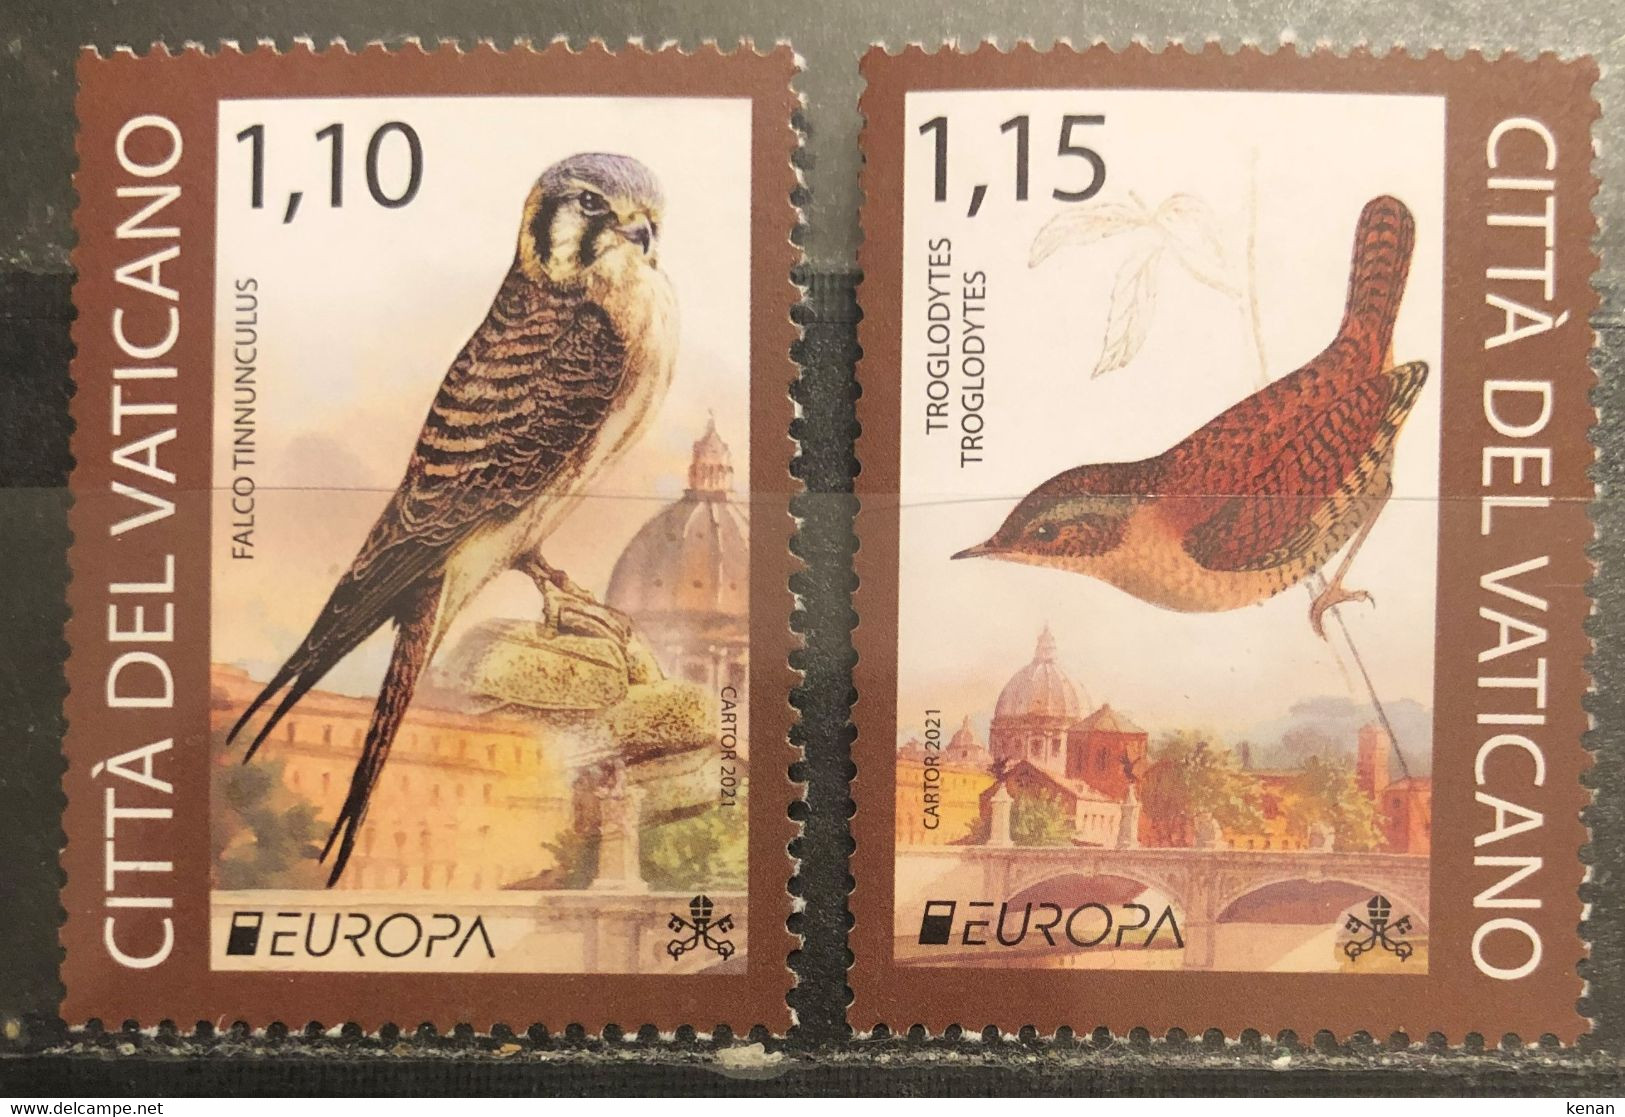 Vatican, 2021, EUROPA Stamps - Endangered National Wildlife (MNH) - Ungebraucht